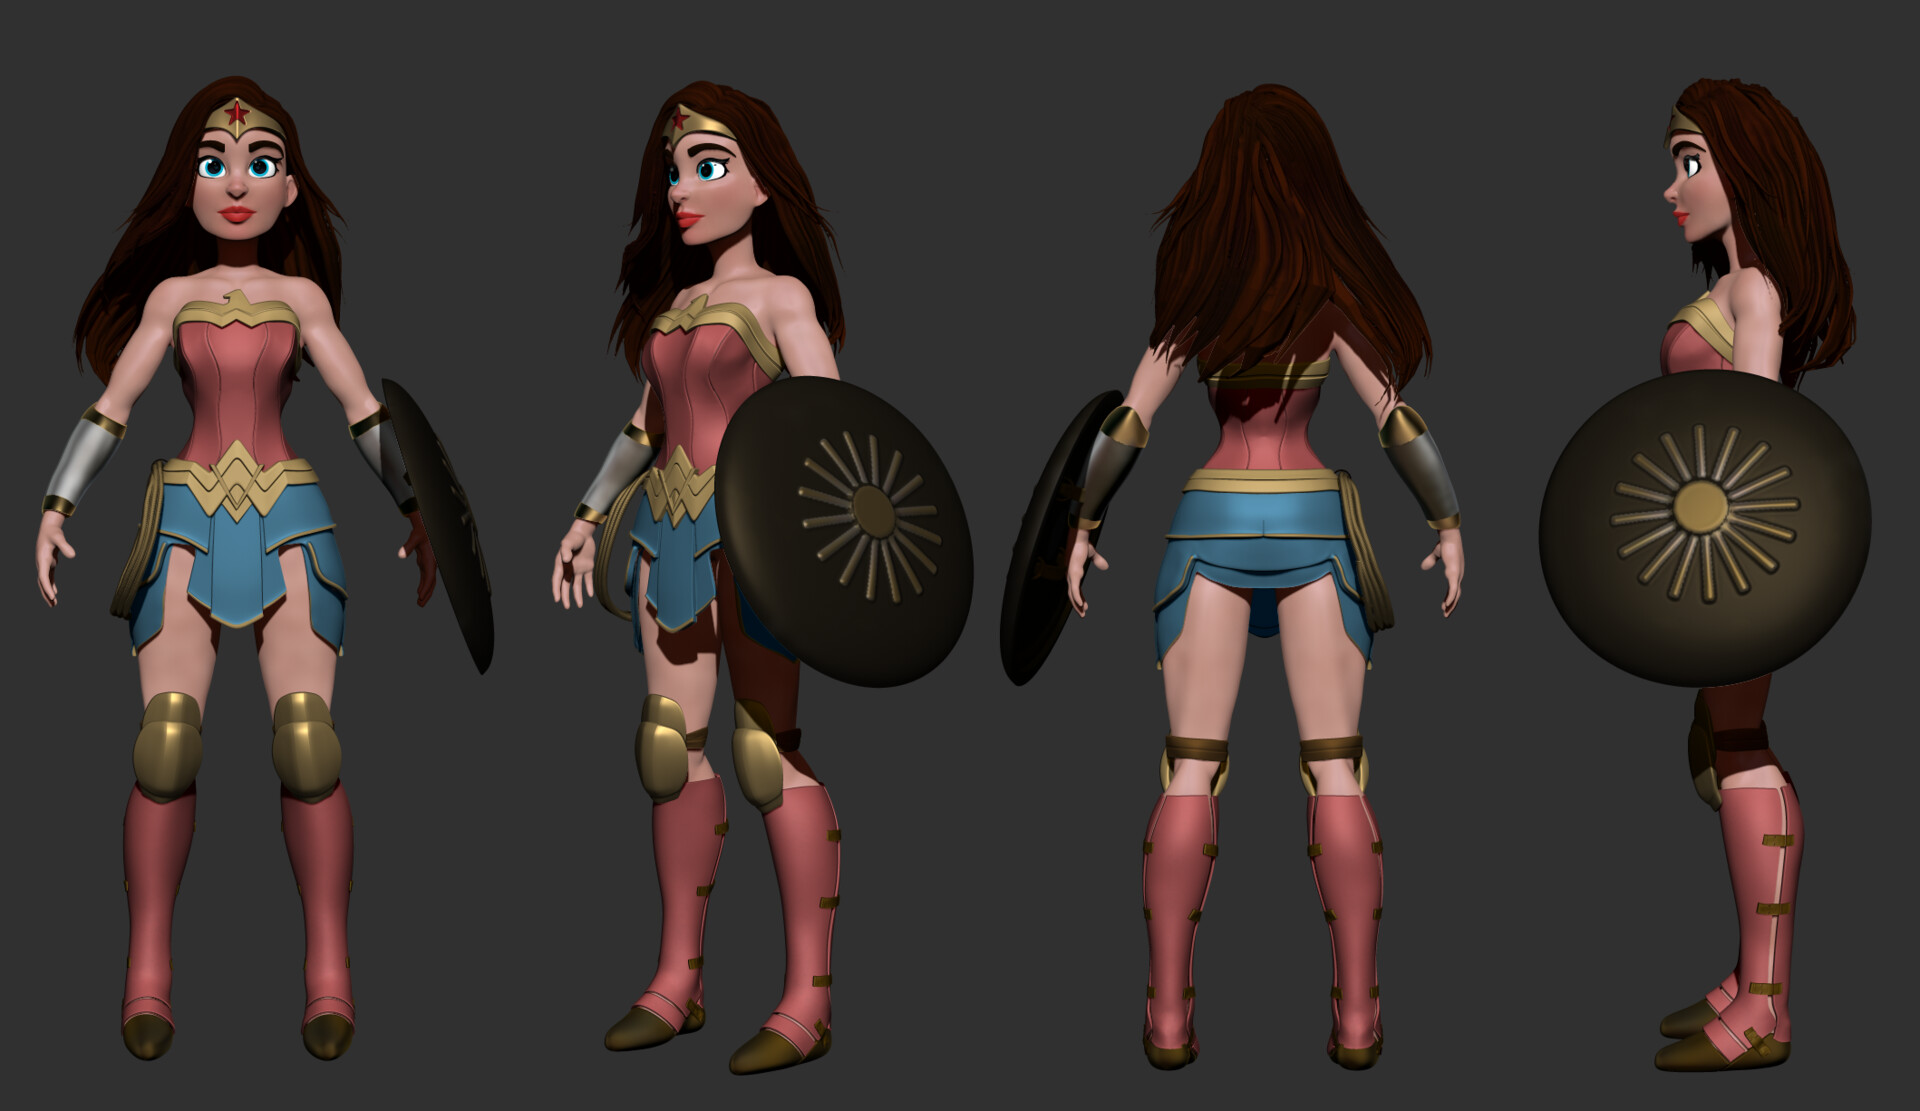 ArtStation - Stylized Wonder Woman Game Model